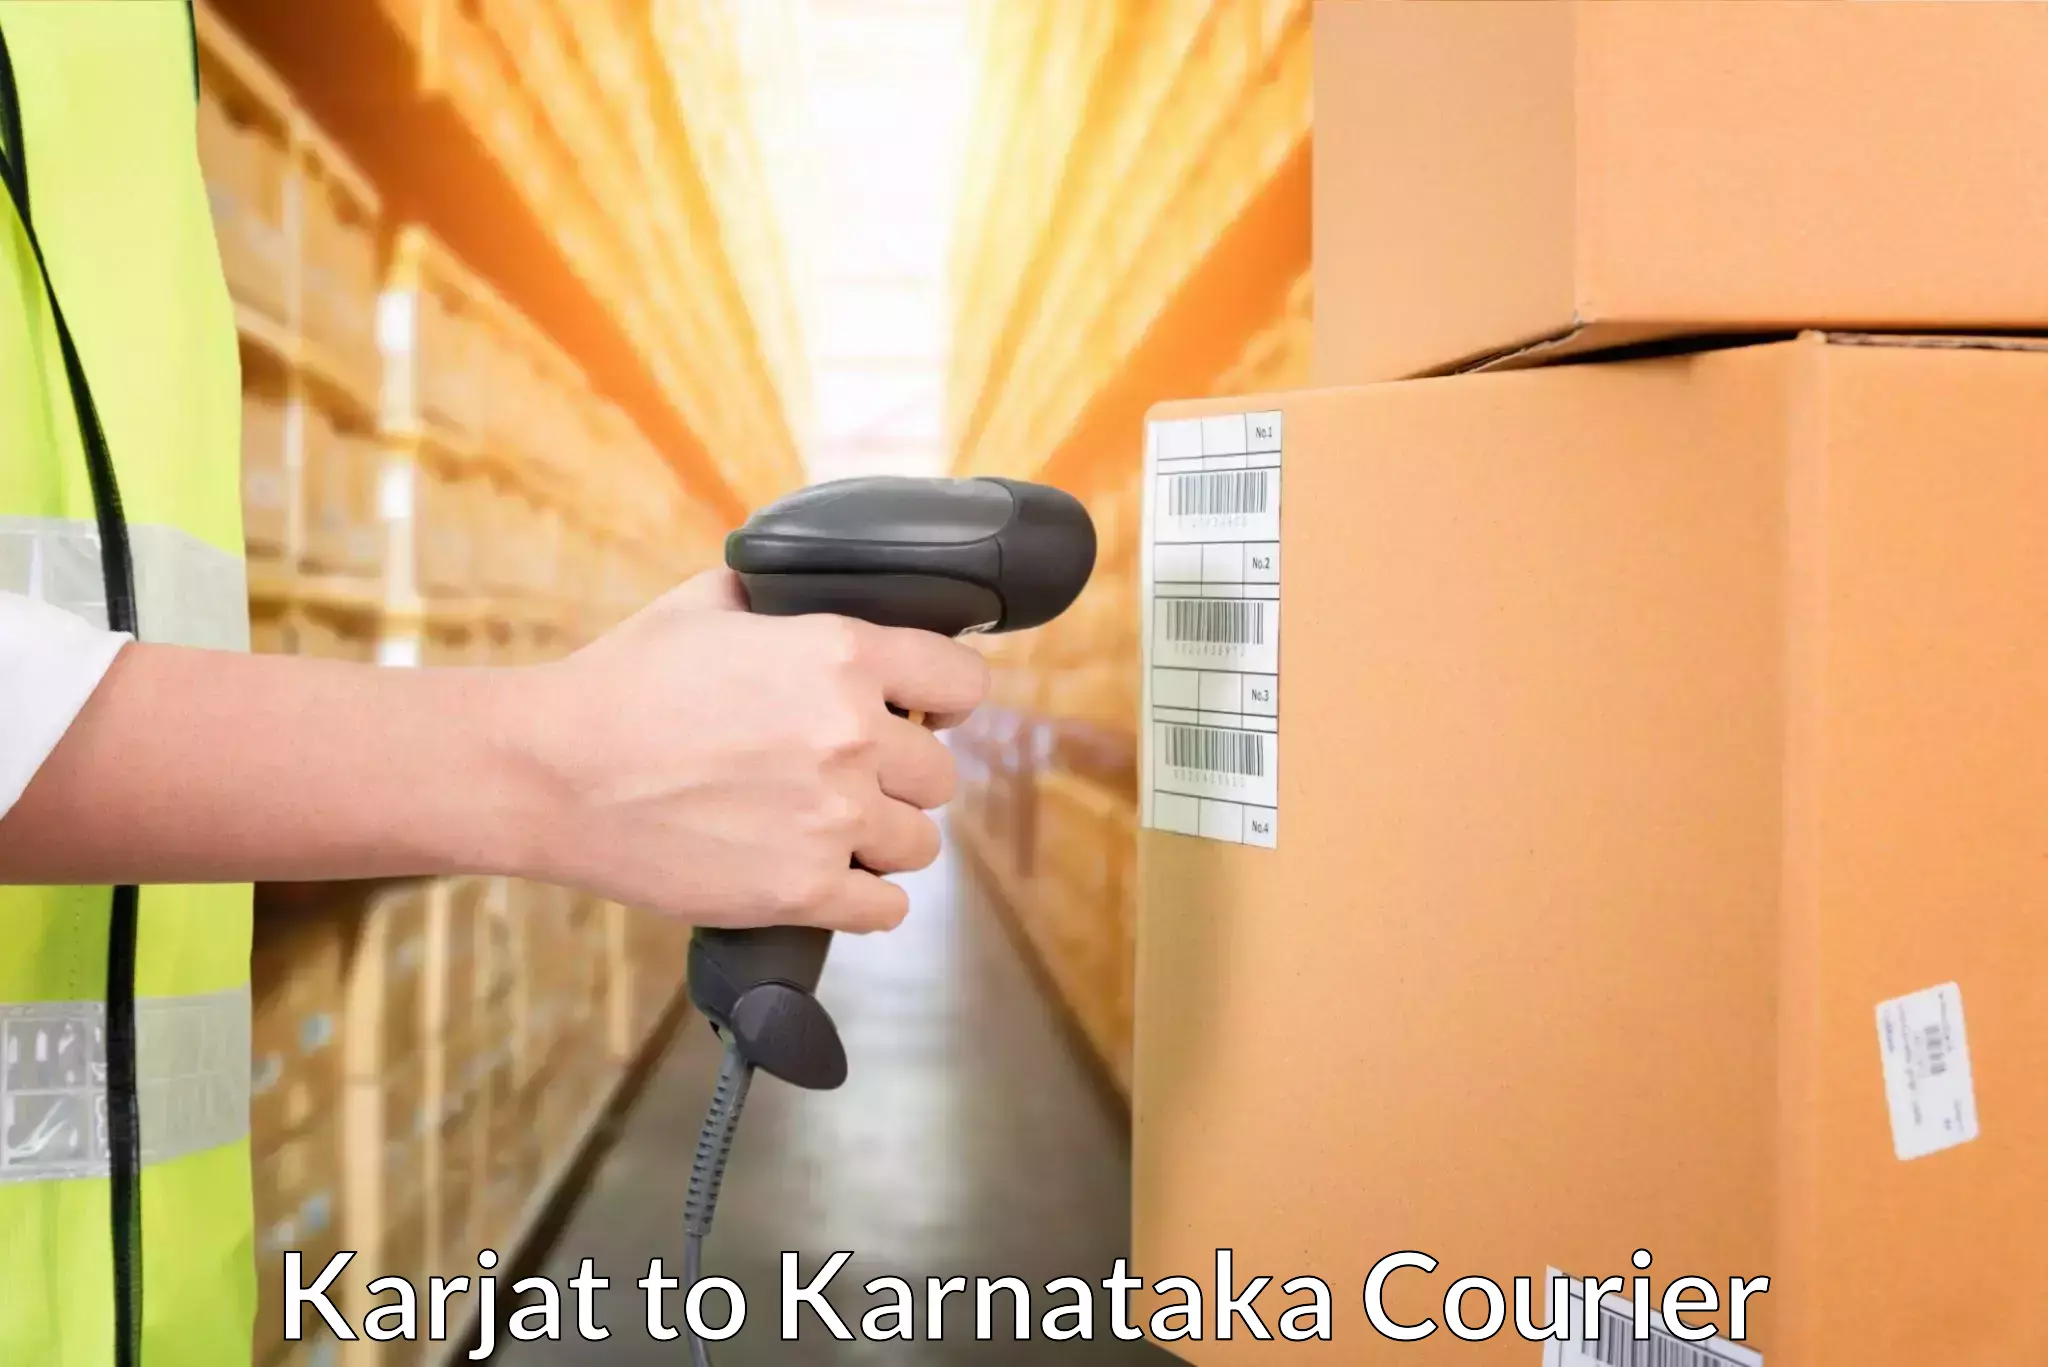 Flexible delivery schedules Karjat to Aland Kalaburagi